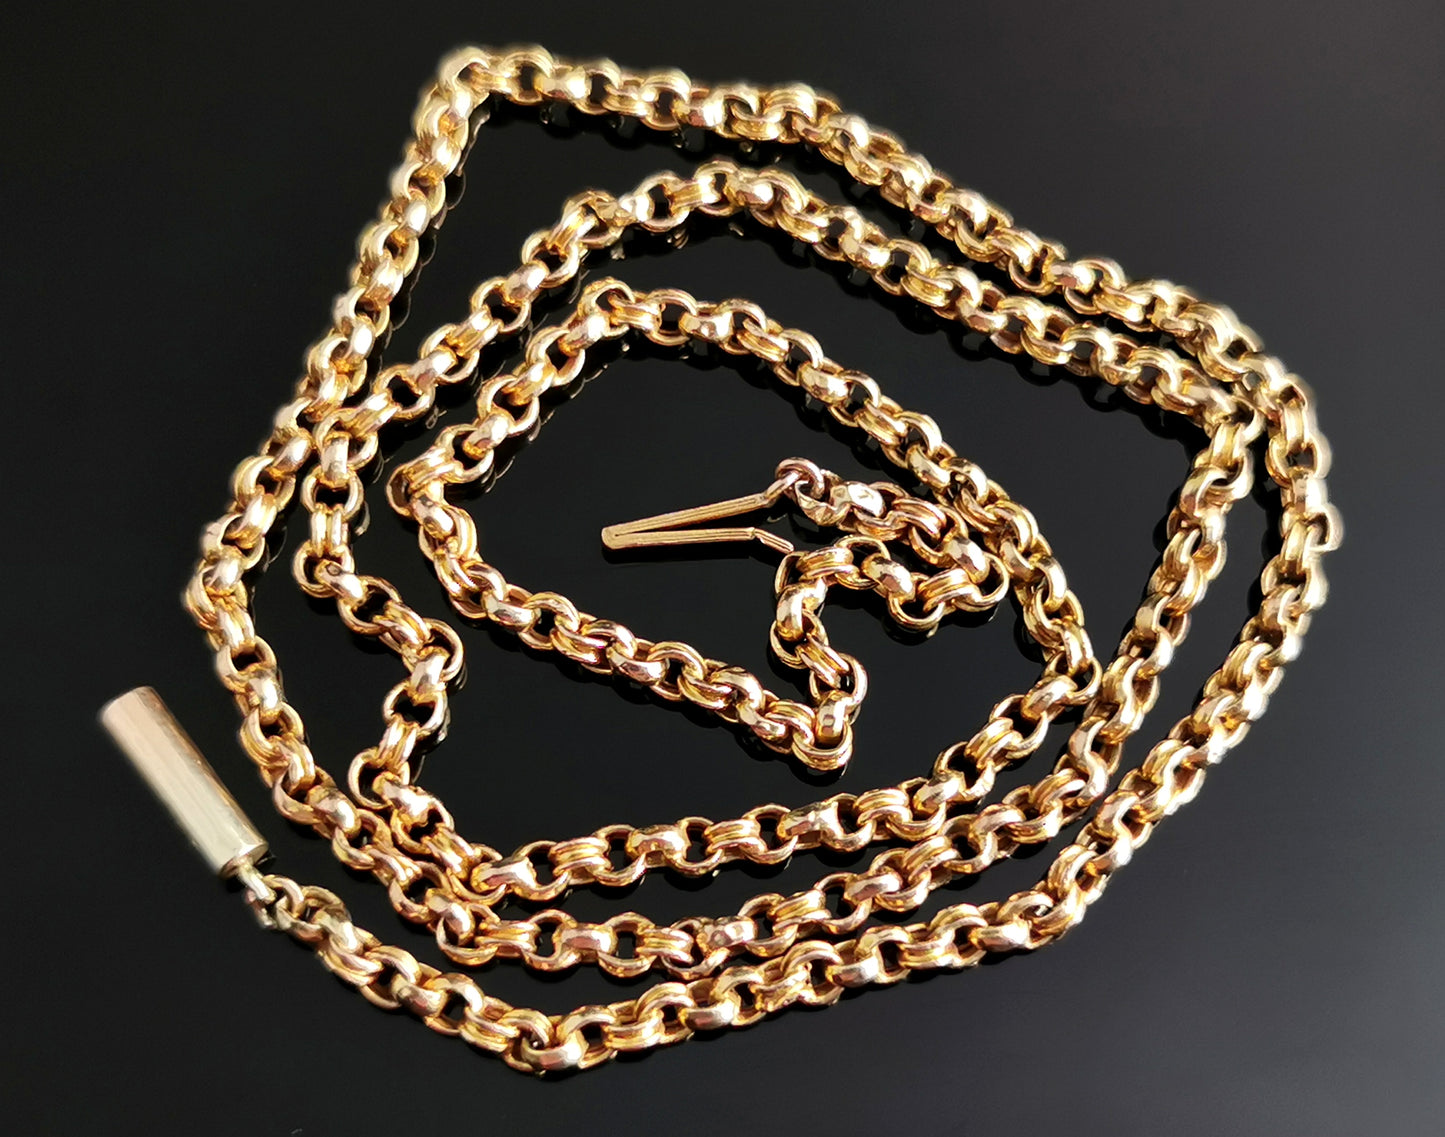 Antique 18ct gold fancy rolo link chain necklace, Edwardian